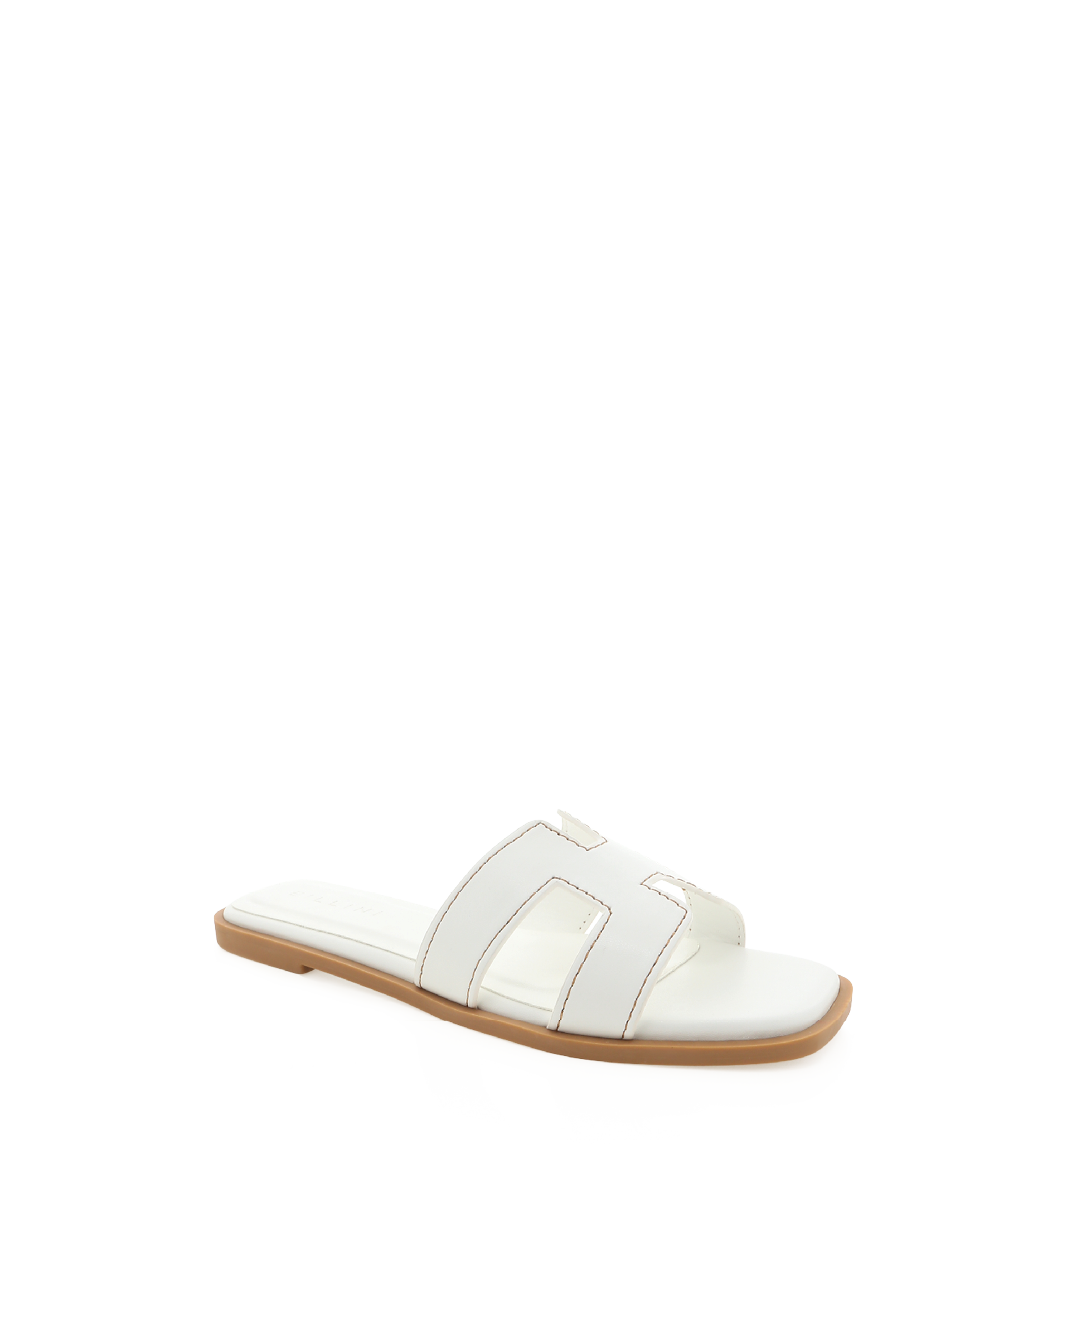 GORDY - WHITE-TAN-Sandals-Billini-Billini